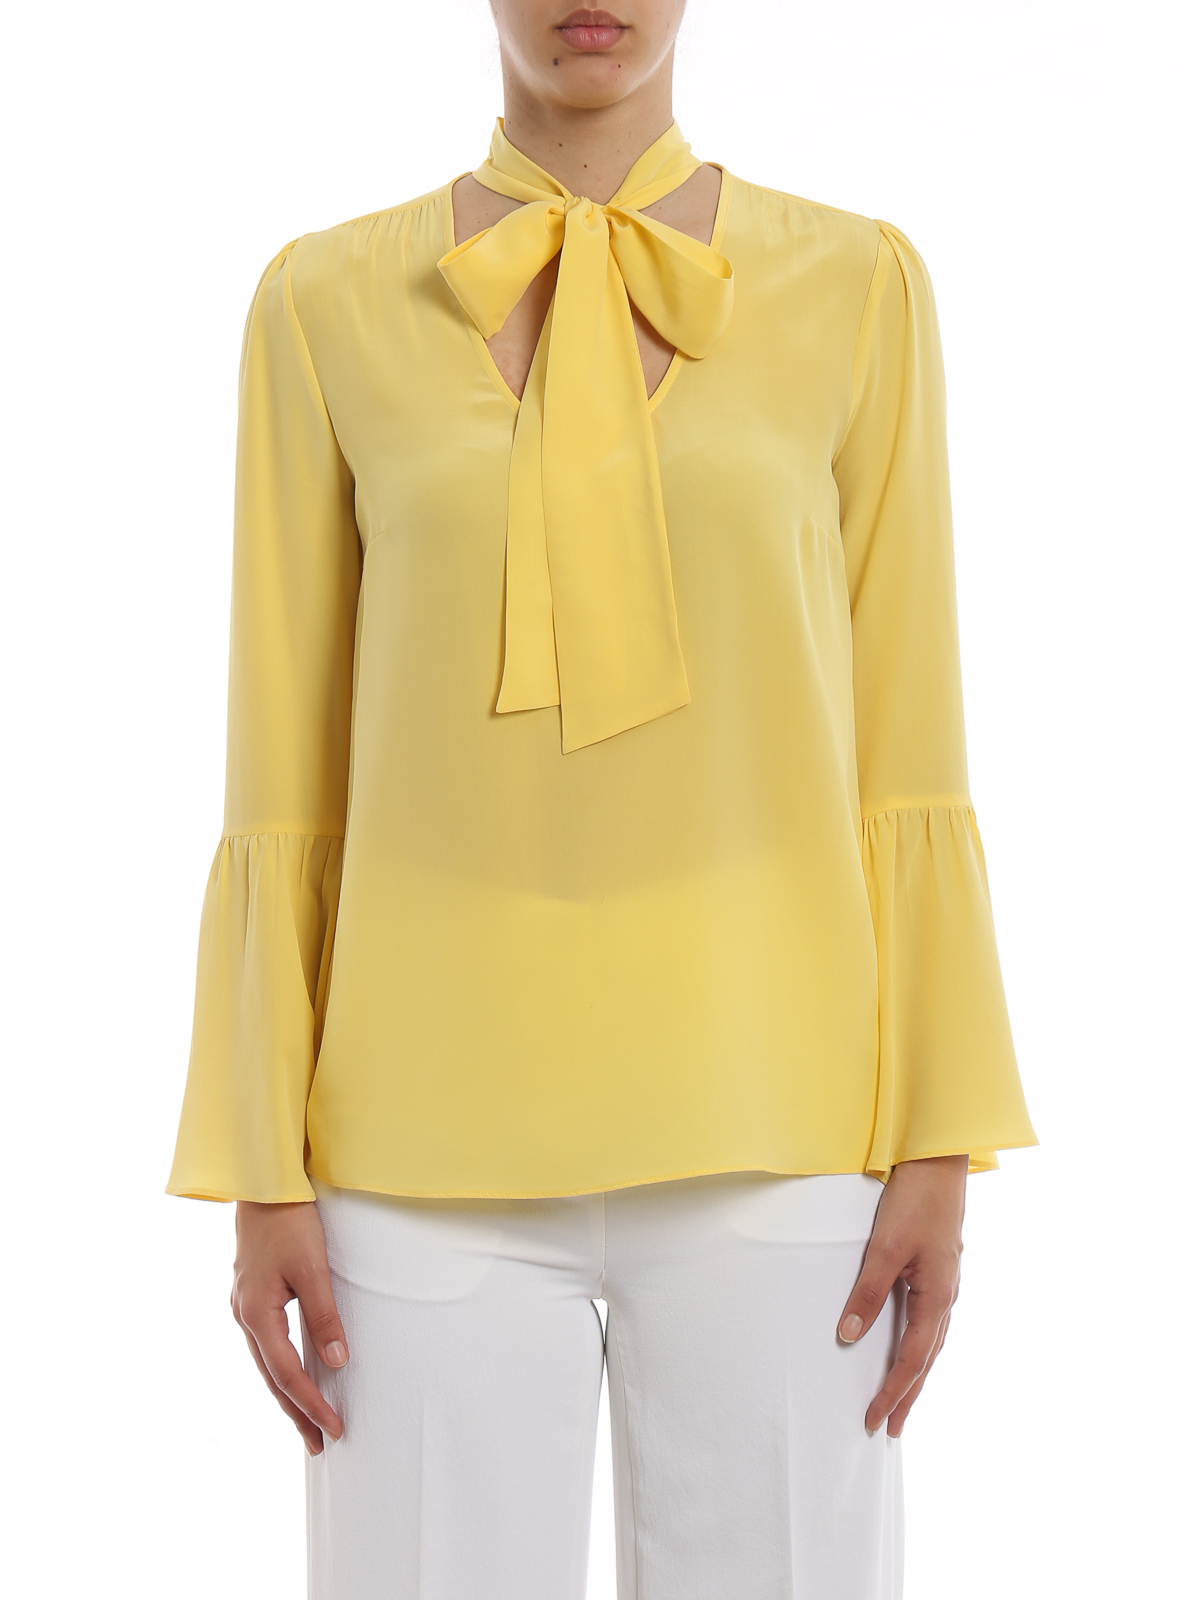 michael kors yellow blouse